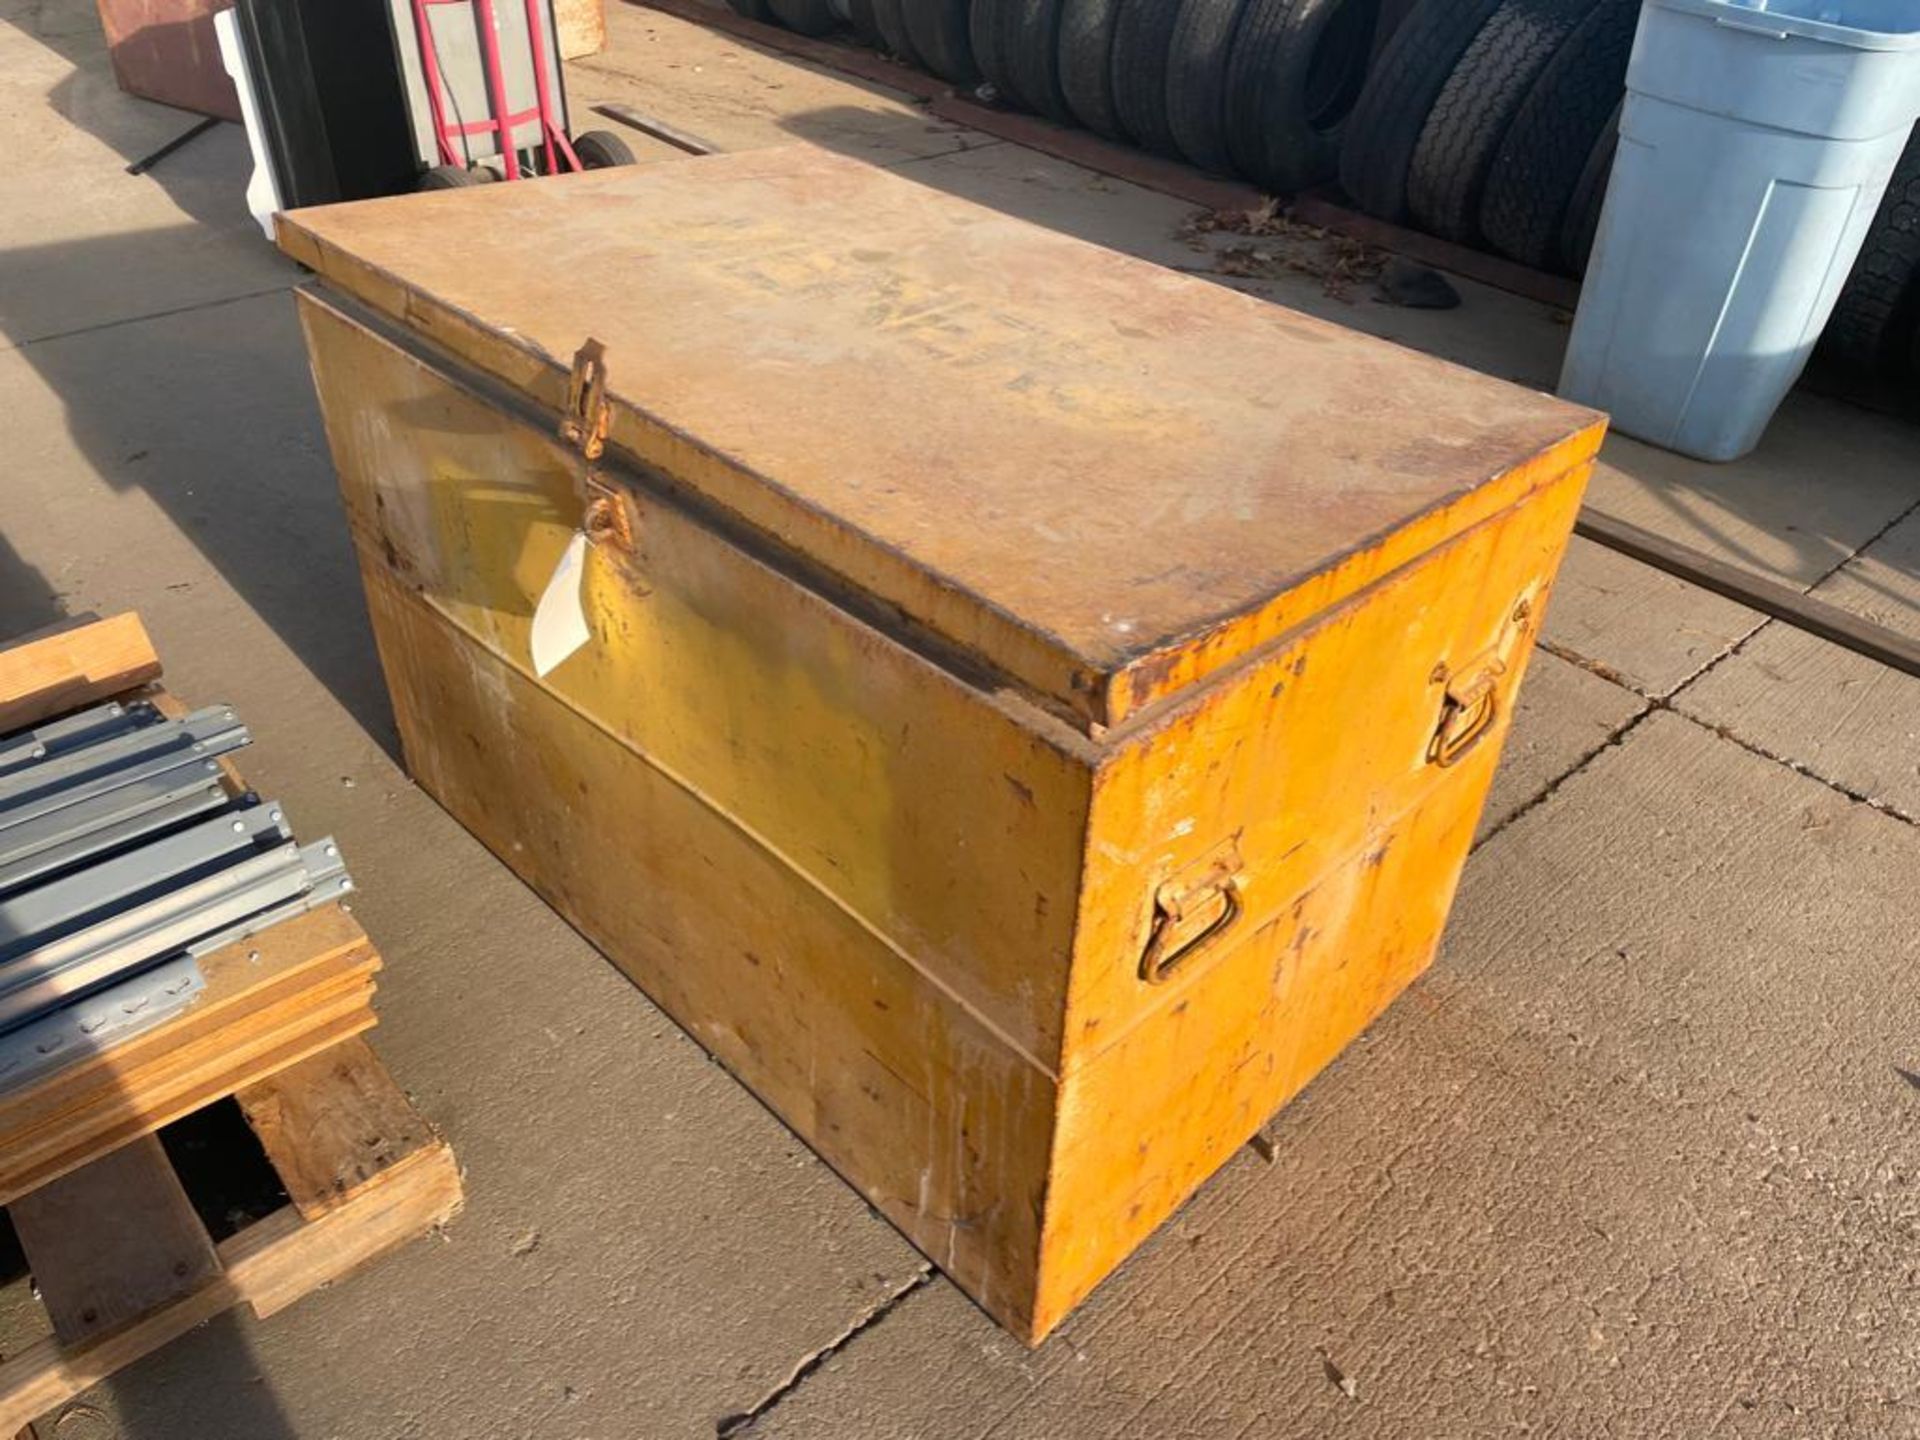 30" x 48" x 30" Metal Storage Box. Located in Hazelwood, MO